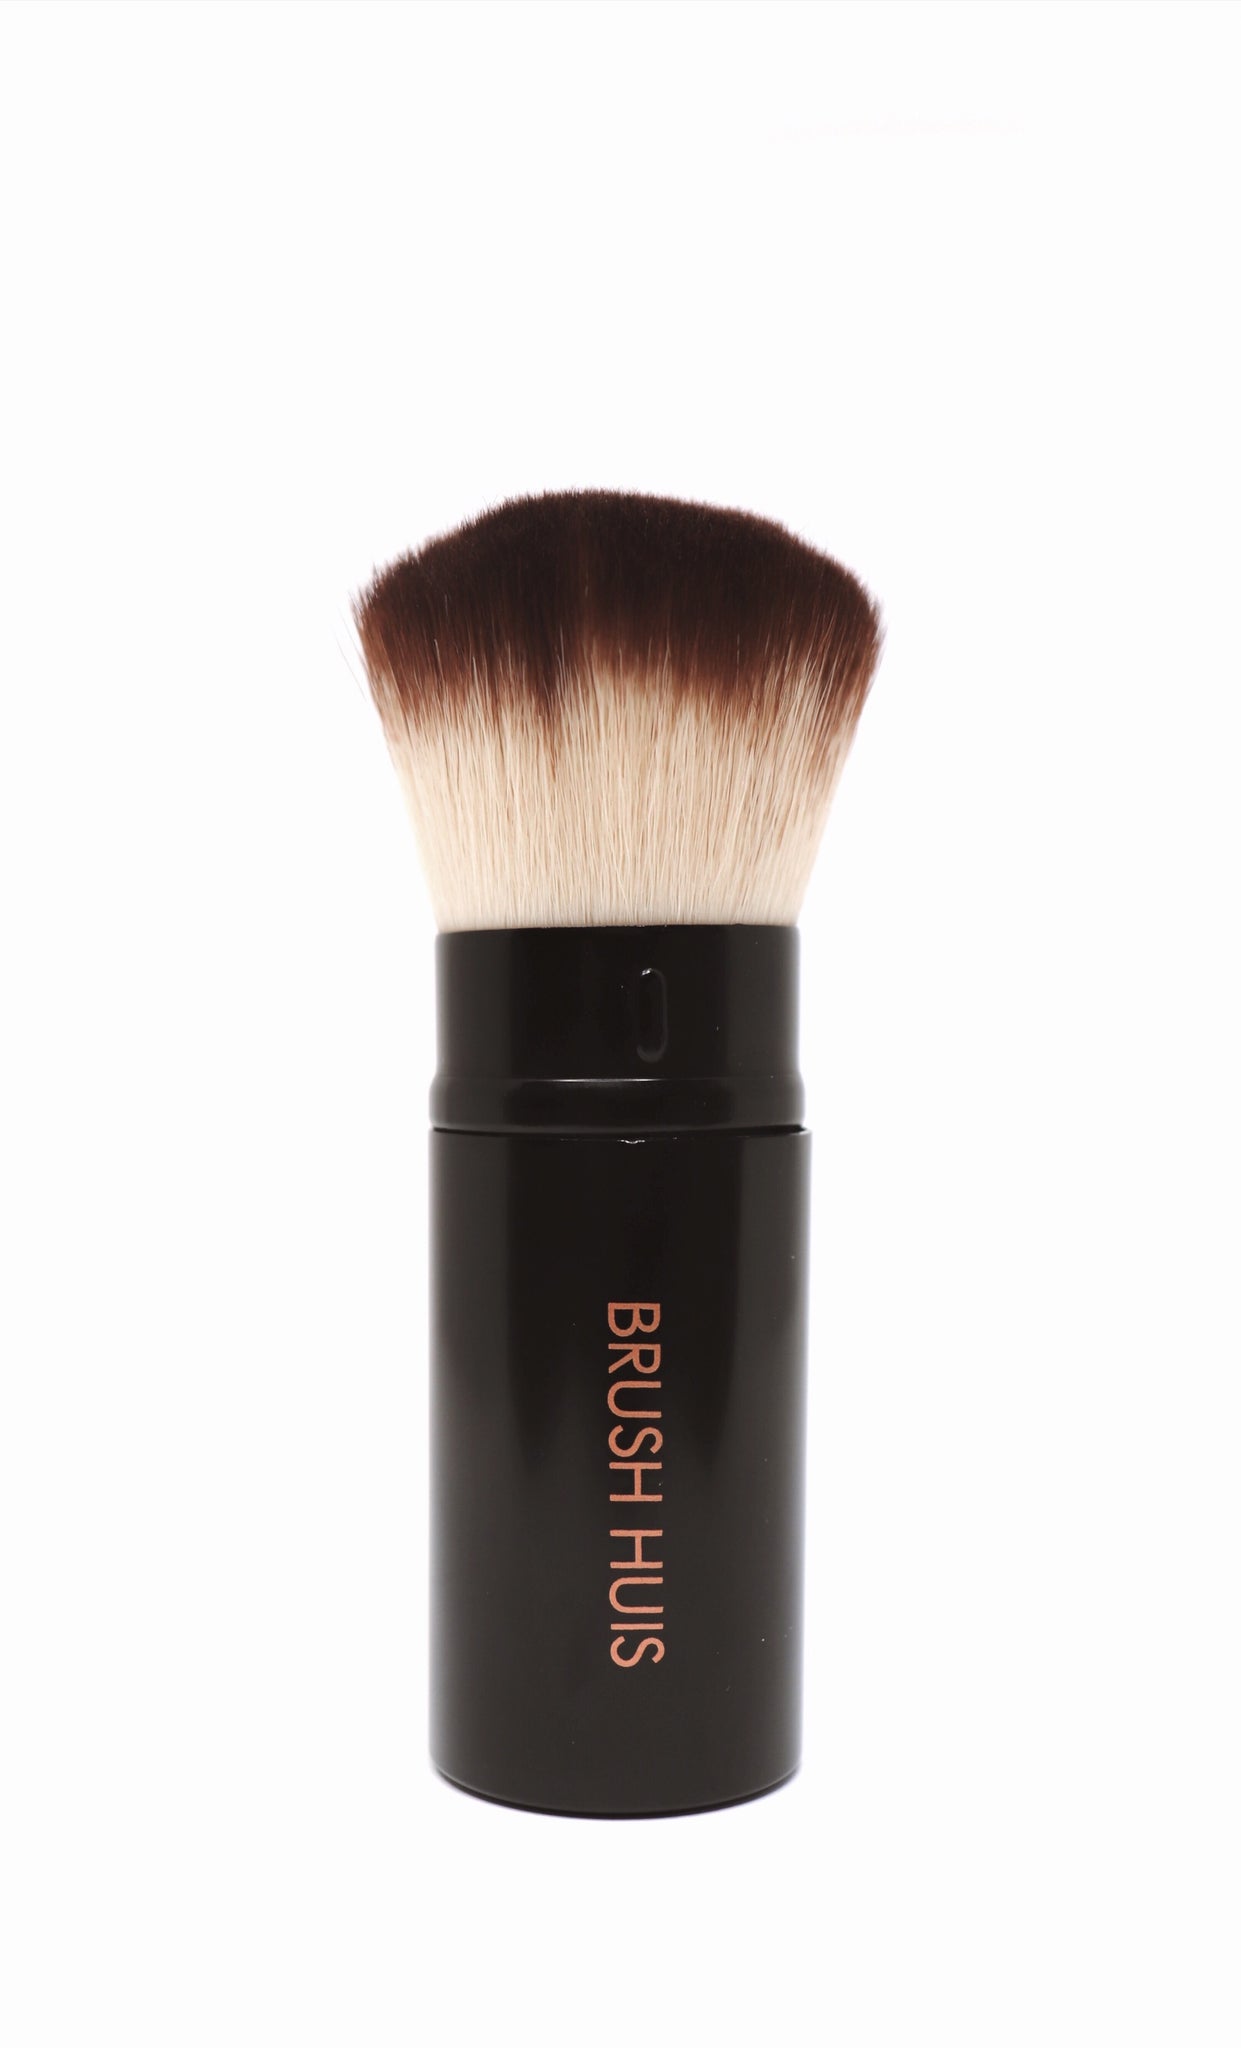 High quality affordable kabuki makeup brush, compact with a lid to keep safe in handbag.